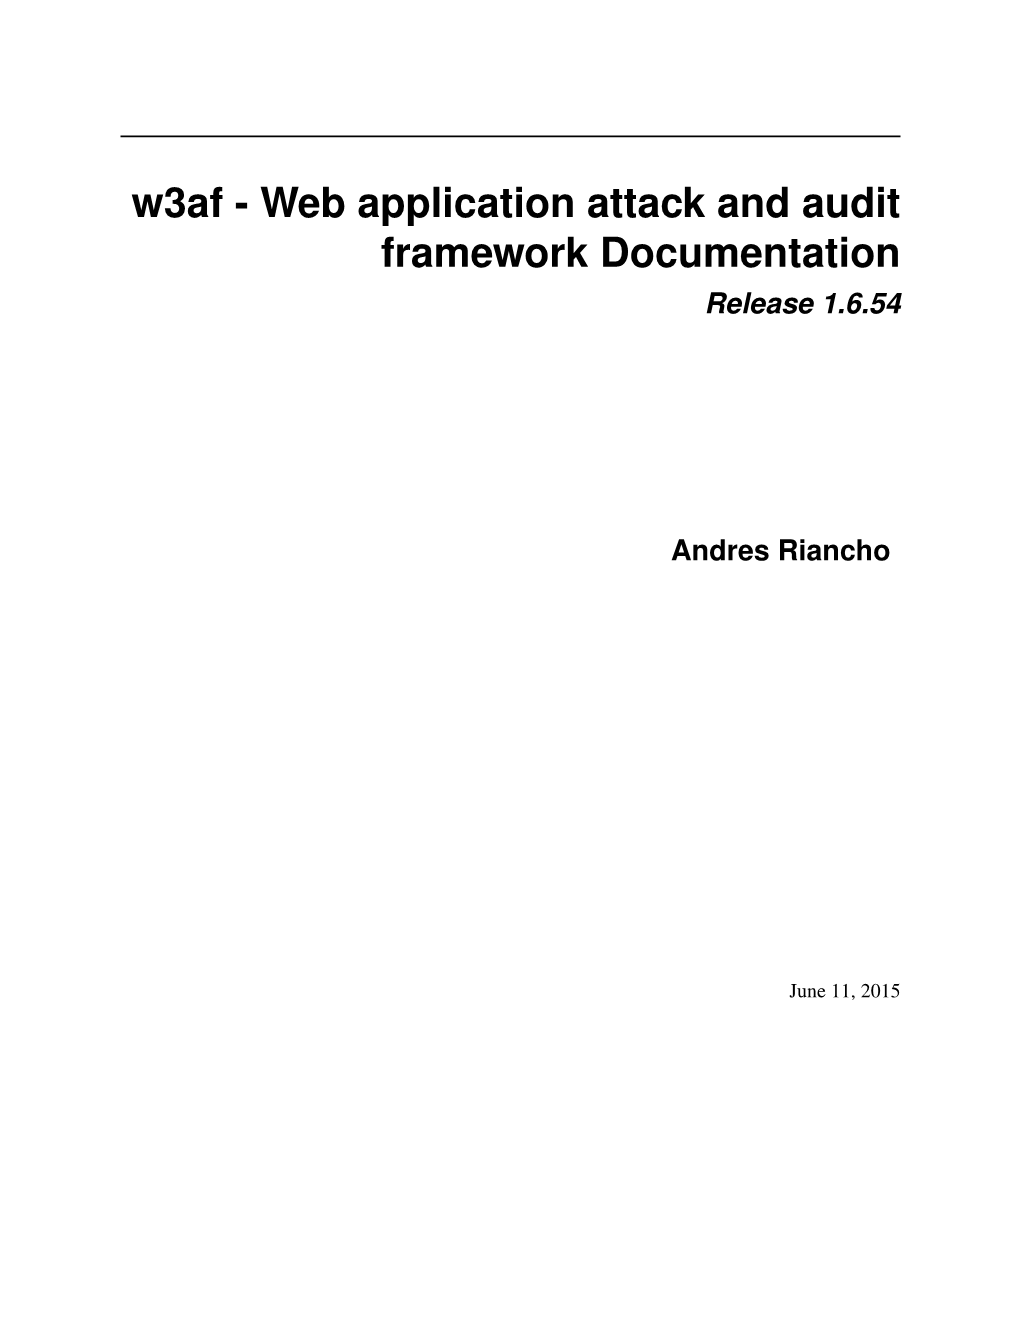 Web Application Attack and Audit Framework Documentation Release 1.6.54